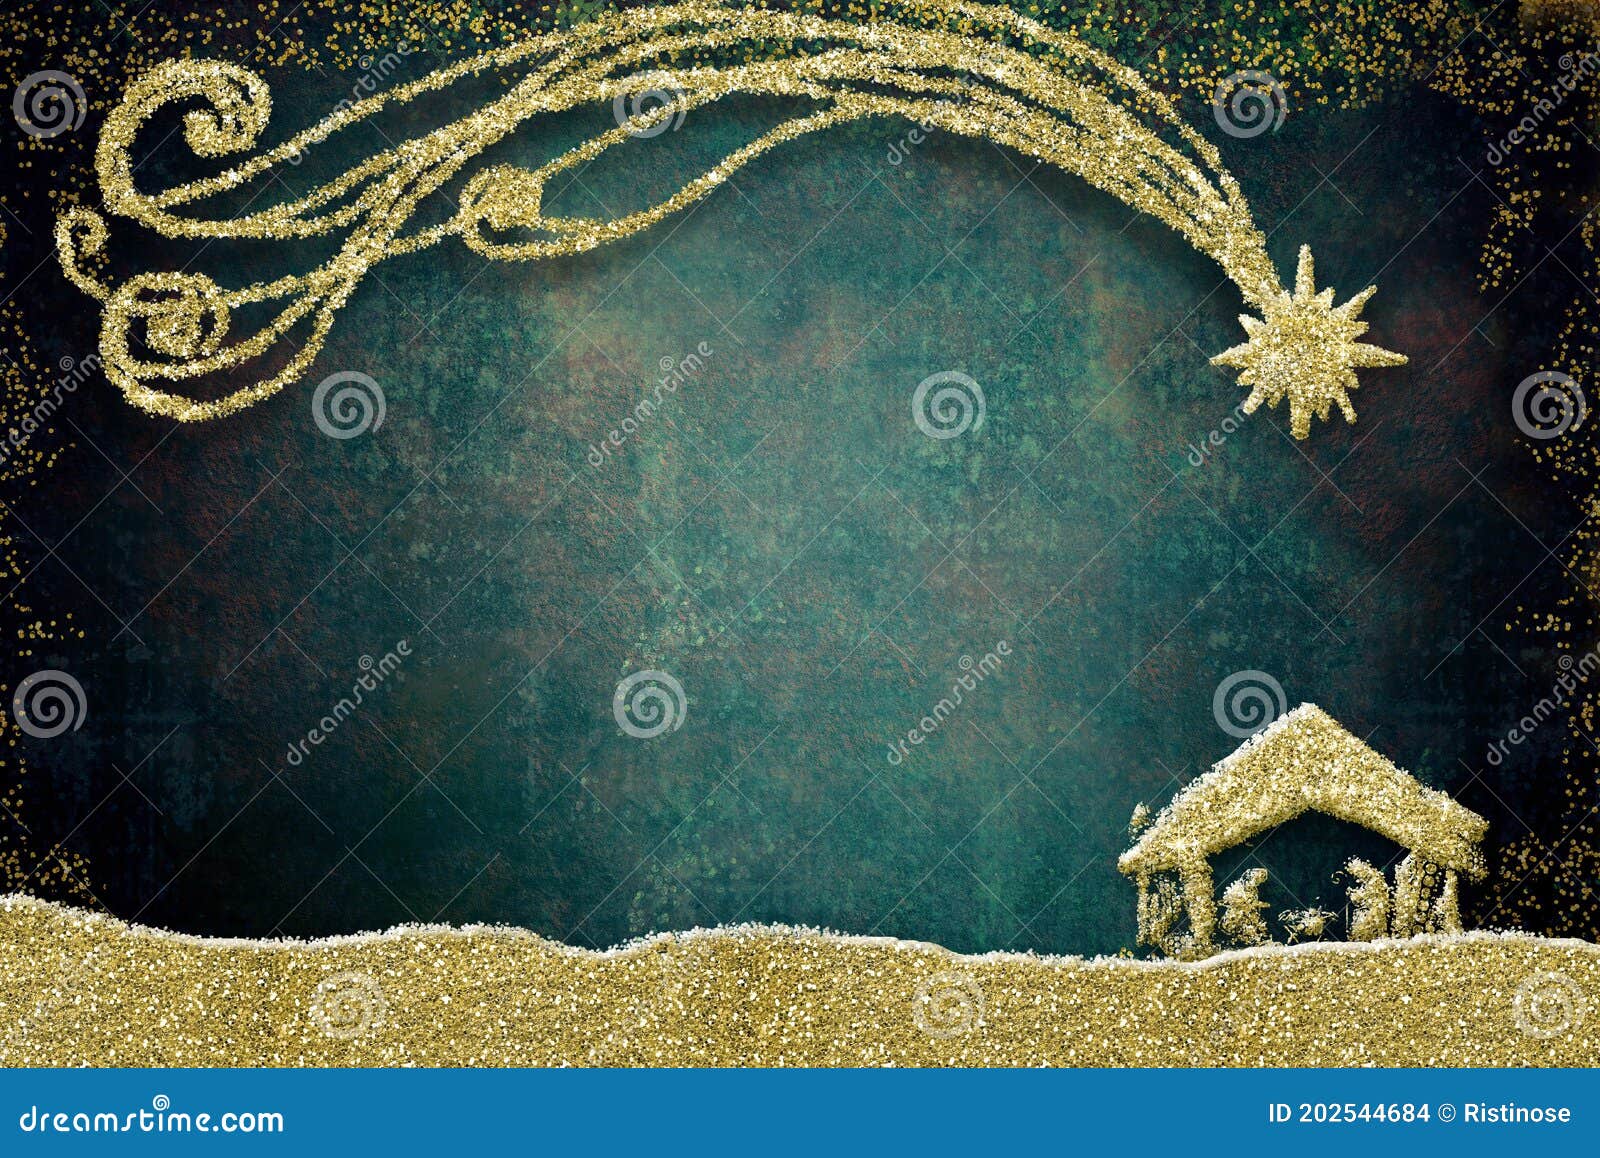 christmas nativity scene greetings cards